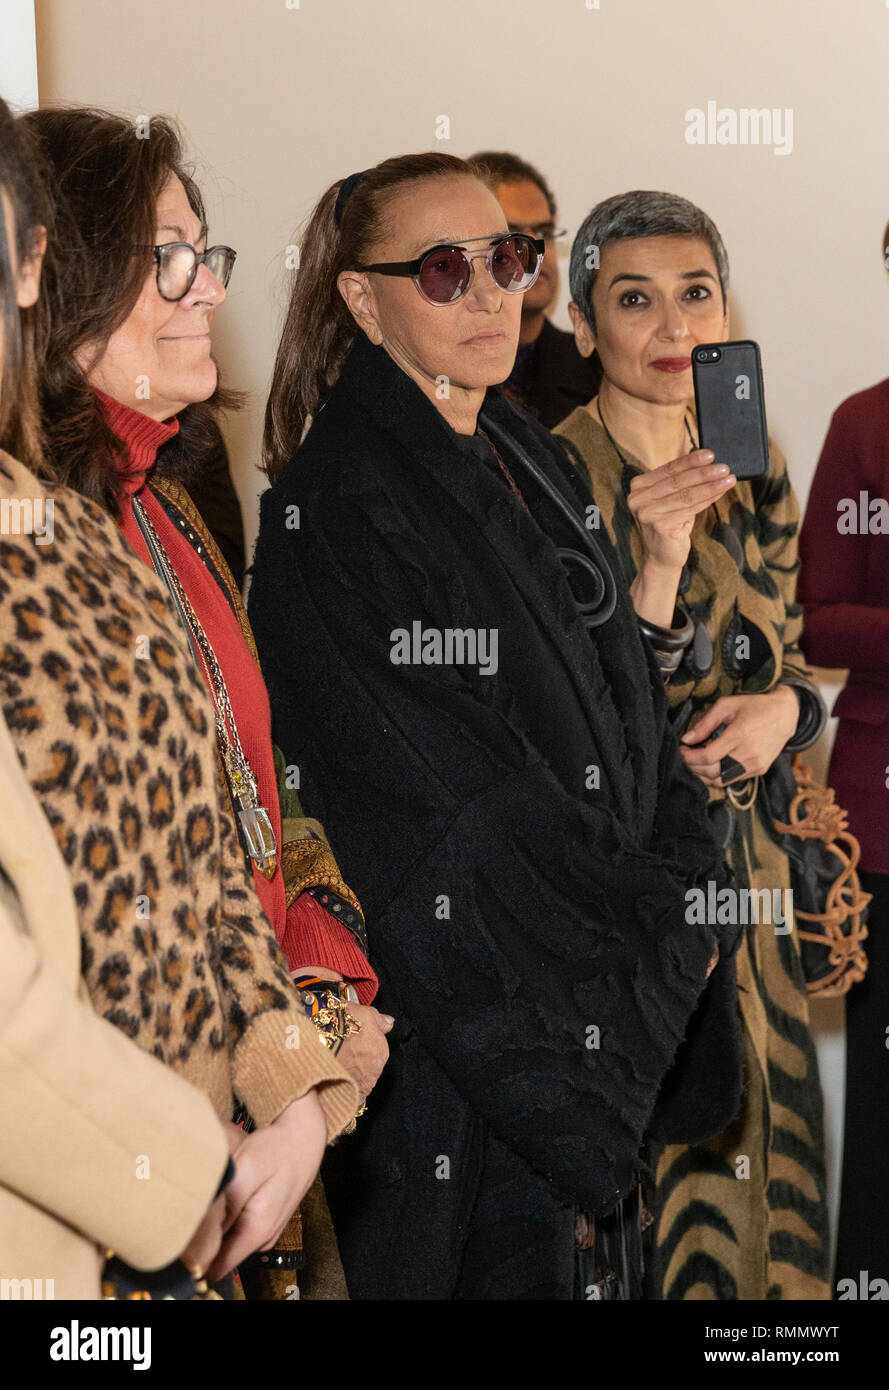 New York, NY - Febbruary 13, 2019: Fern Mallis and Donna Karan attend Fashion for Peace presentation by Sadhguru Jaggi Vasudev during Fall/Winter fashion week at Spring Studios Stock Photo